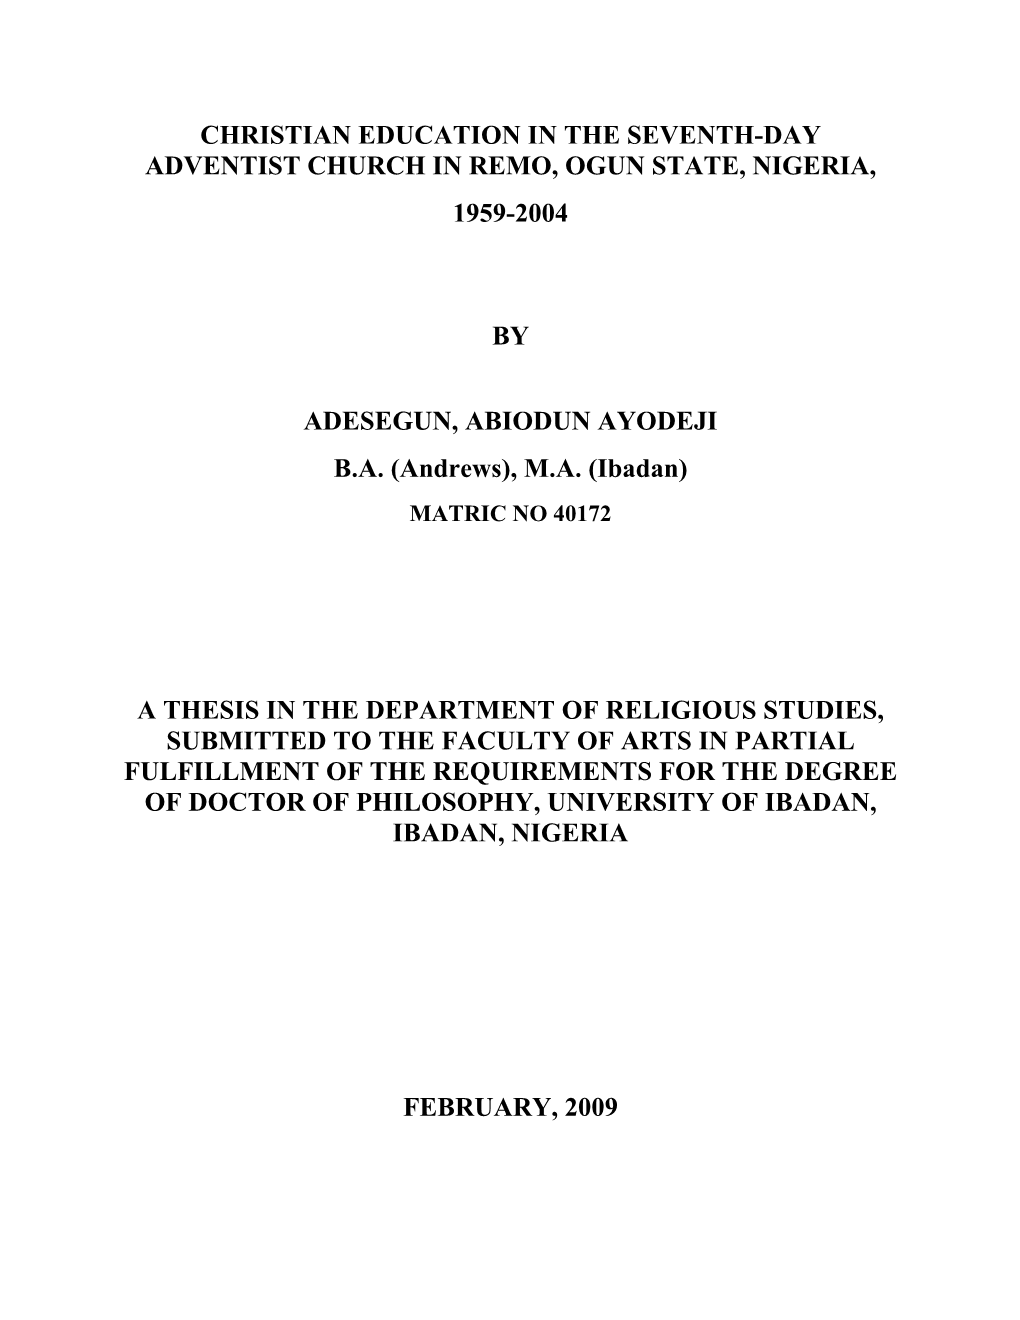 Christian Education in the Seventh-Day Adventist Church in Remo, Ogun State, Nigeria, 1959-2004